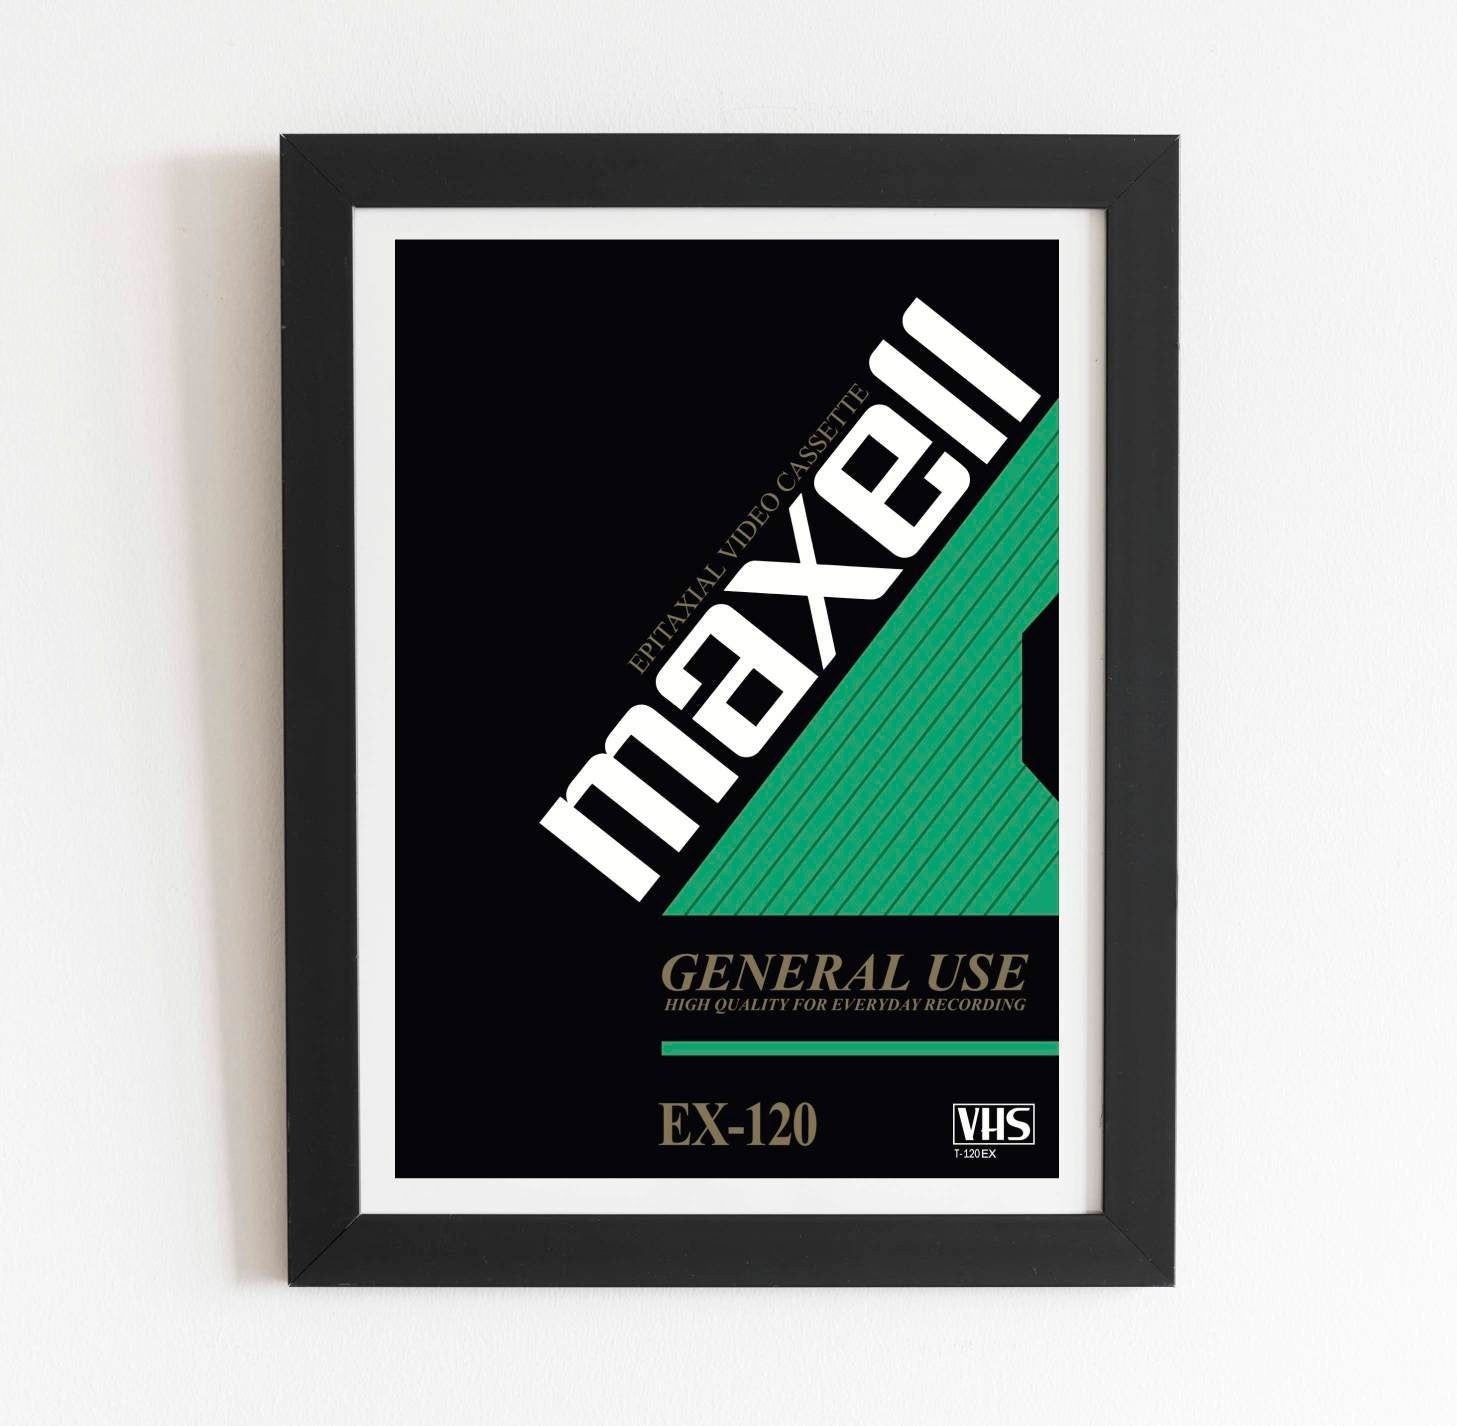 Maxell VHS retro art design print poster